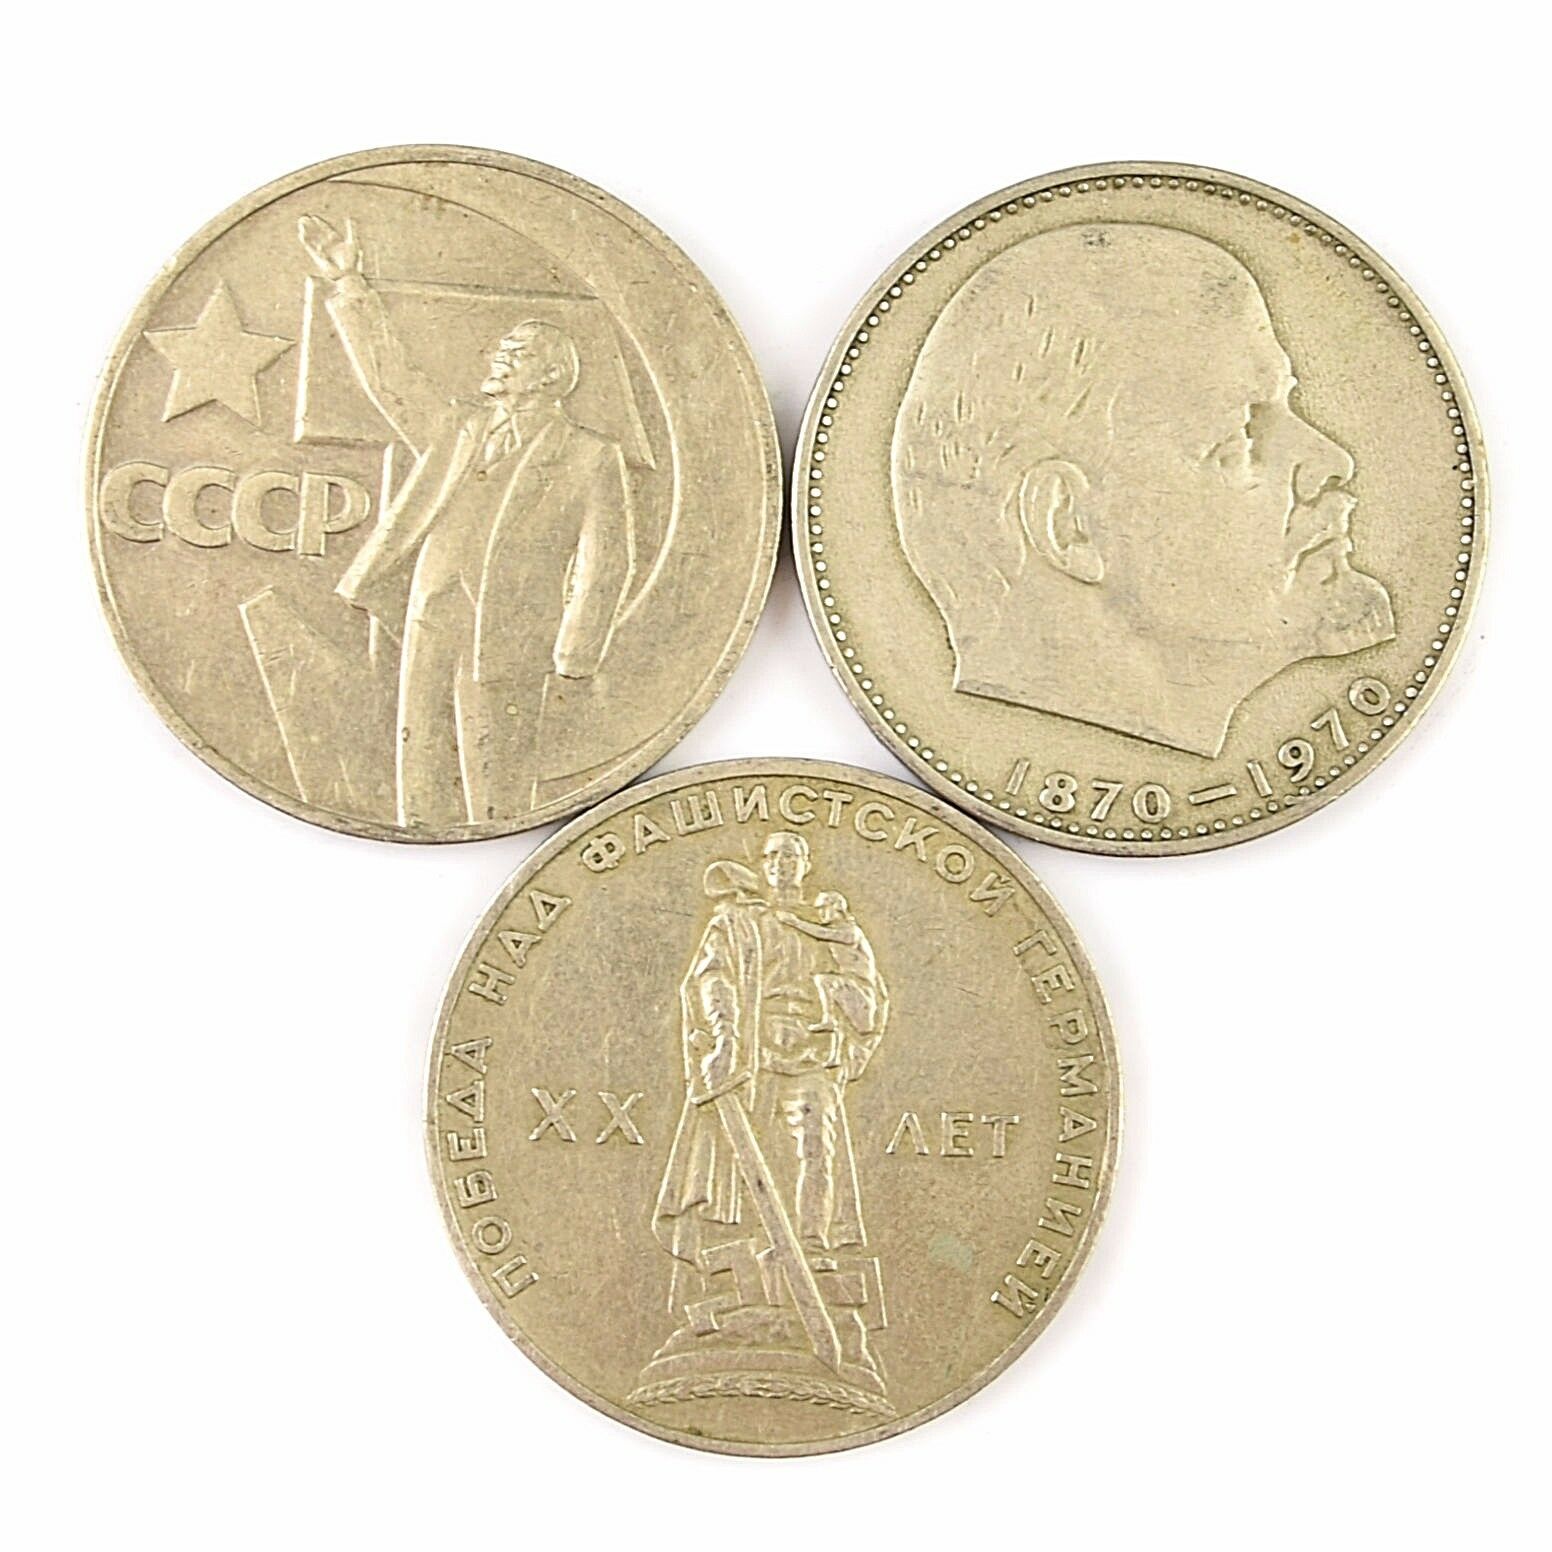 3 X Ussr Soviet Russia Commemorative 1 Ruble Coins Set Lenin Head, Hand, Soldier